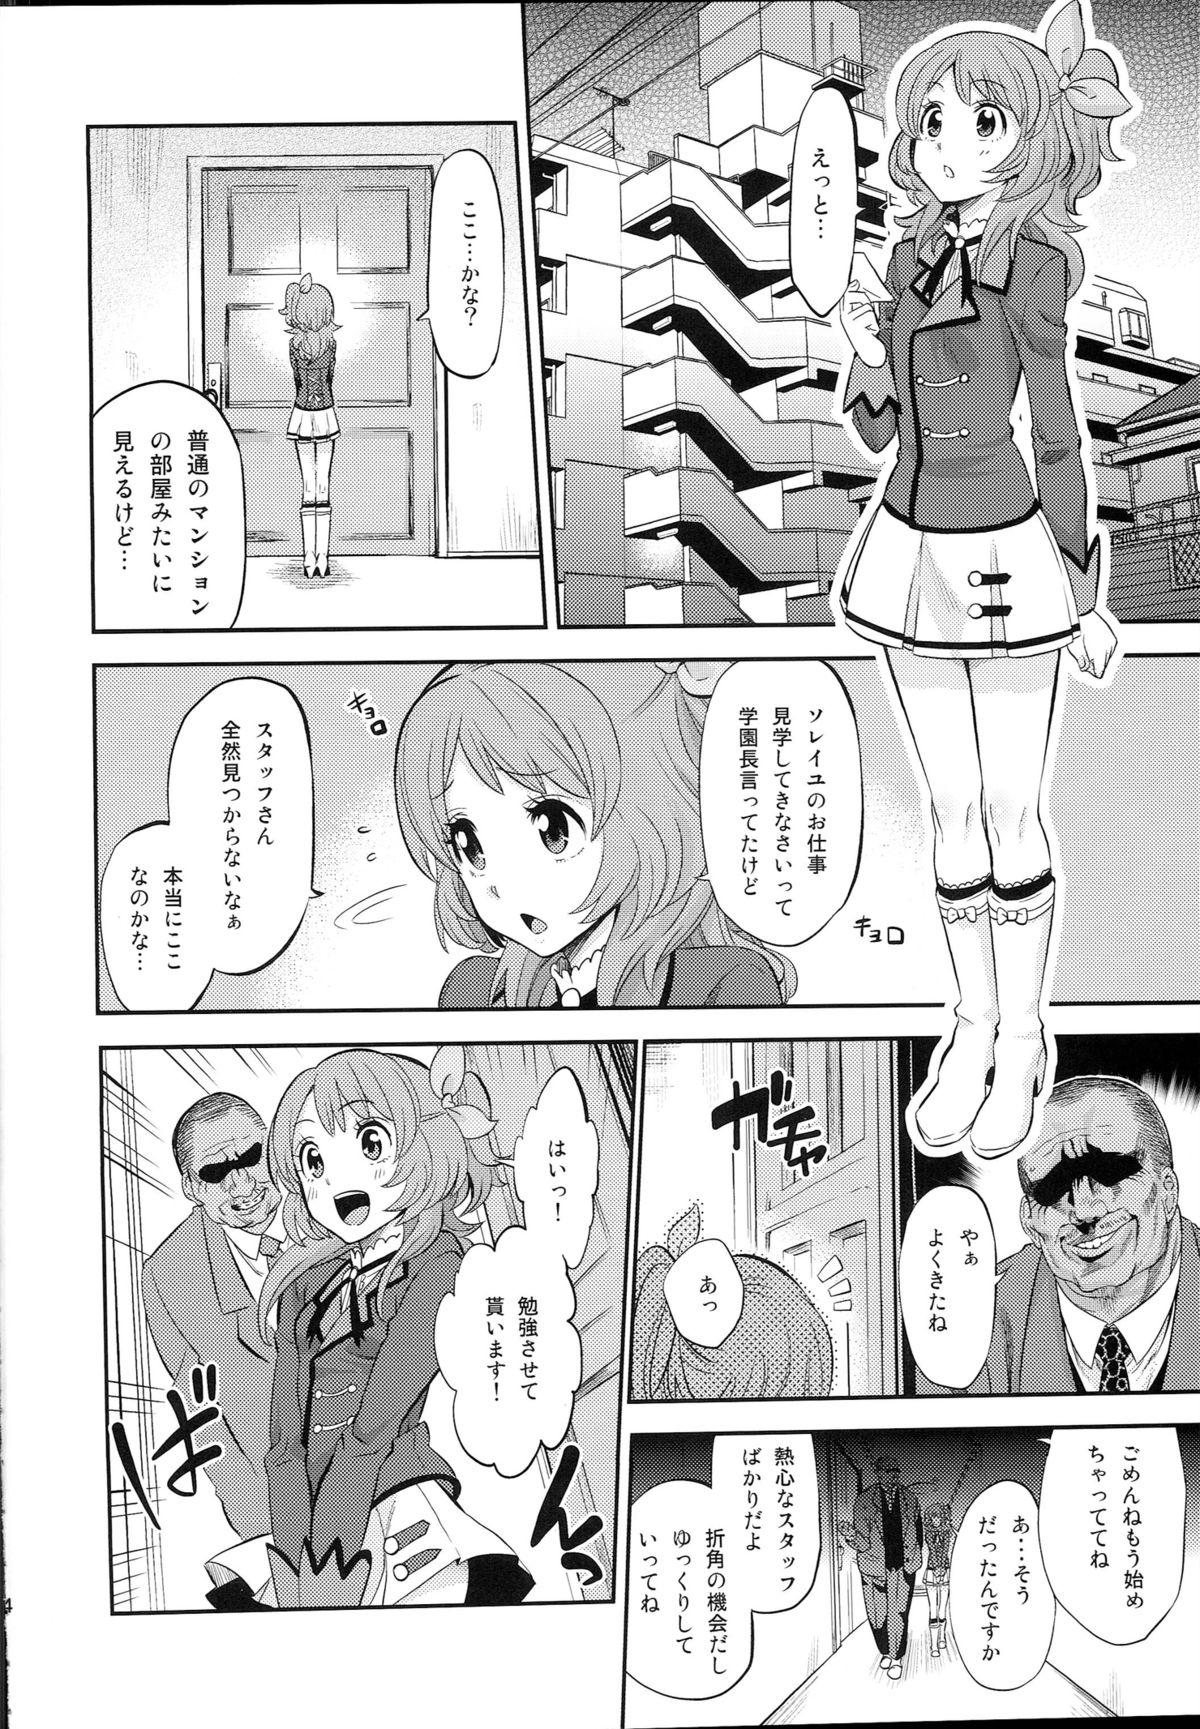 Machine IT WAS A good EXPERiENCE - Aikatsu Wam - Page 4